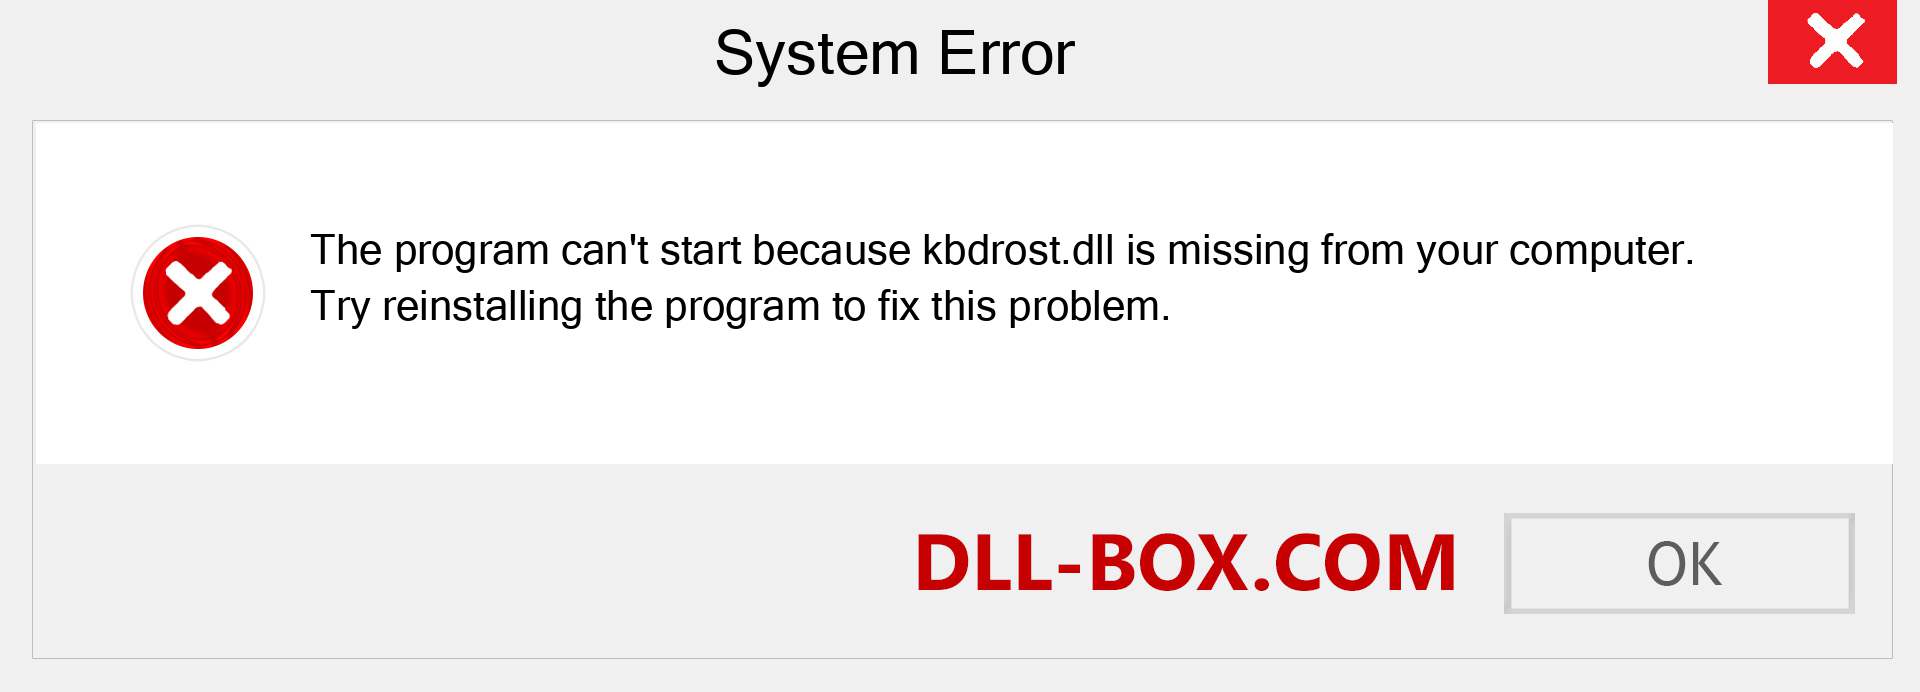  kbdrost.dll file is missing?. Download for Windows 7, 8, 10 - Fix  kbdrost dll Missing Error on Windows, photos, images